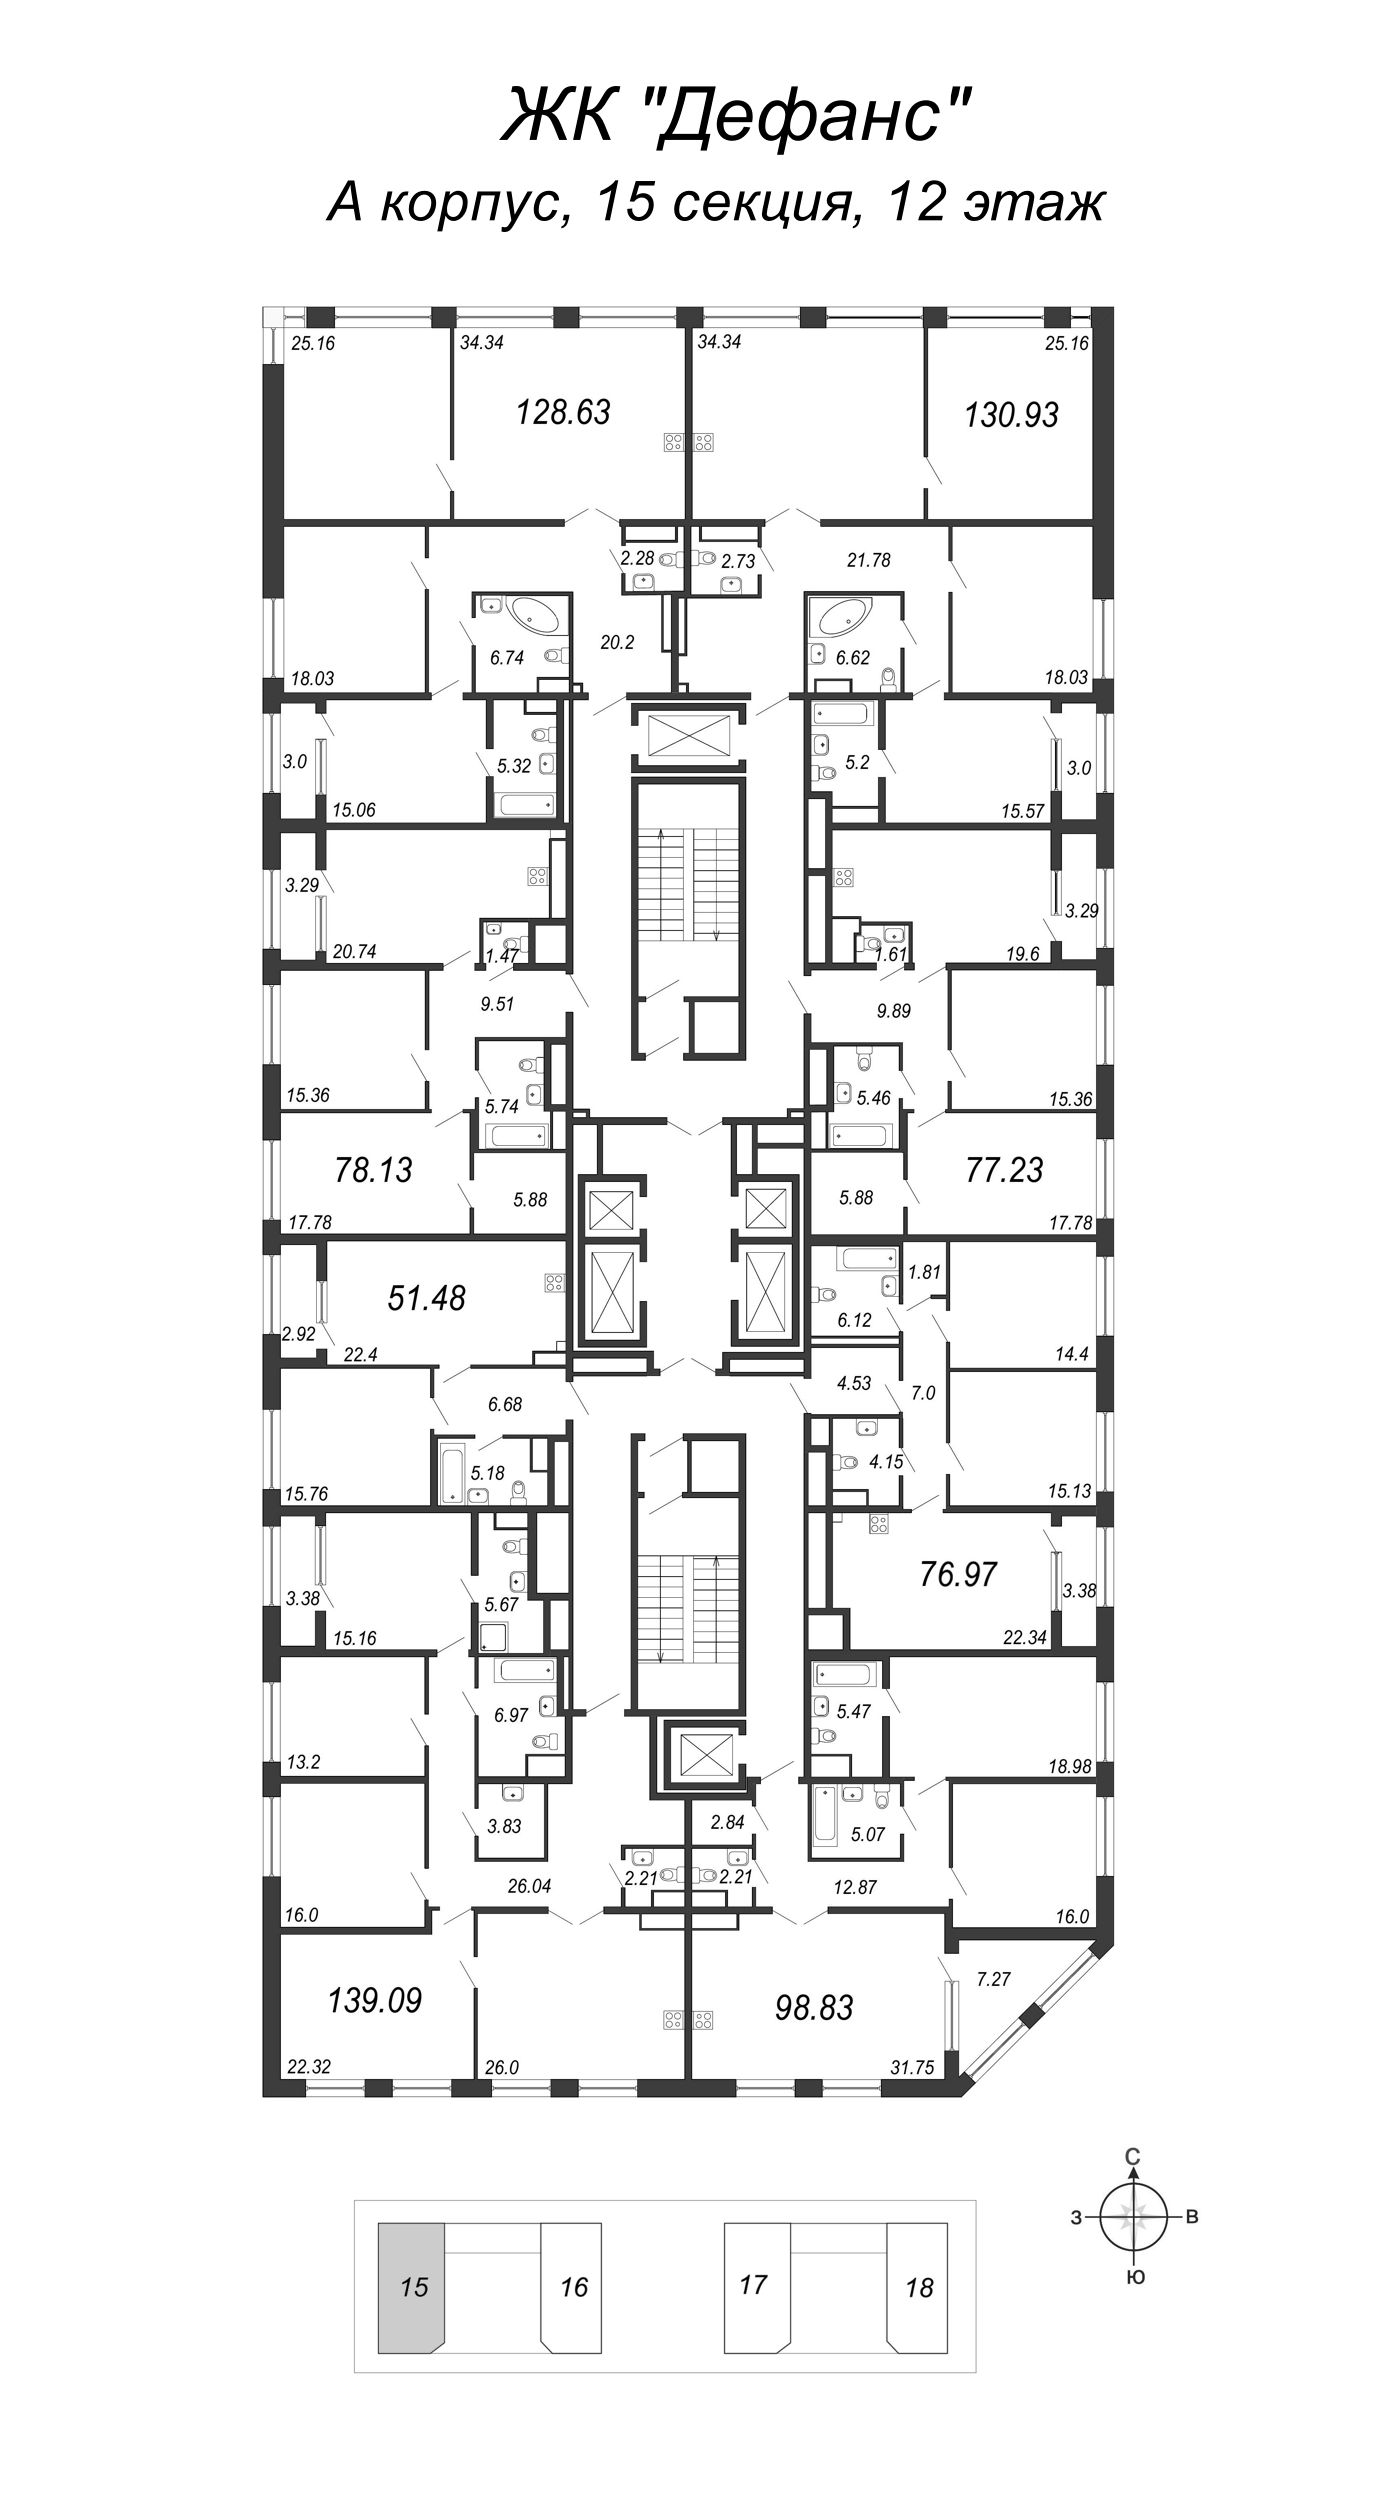 5-комнатная (Евро) квартира, 139.09 м² - планировка этажа